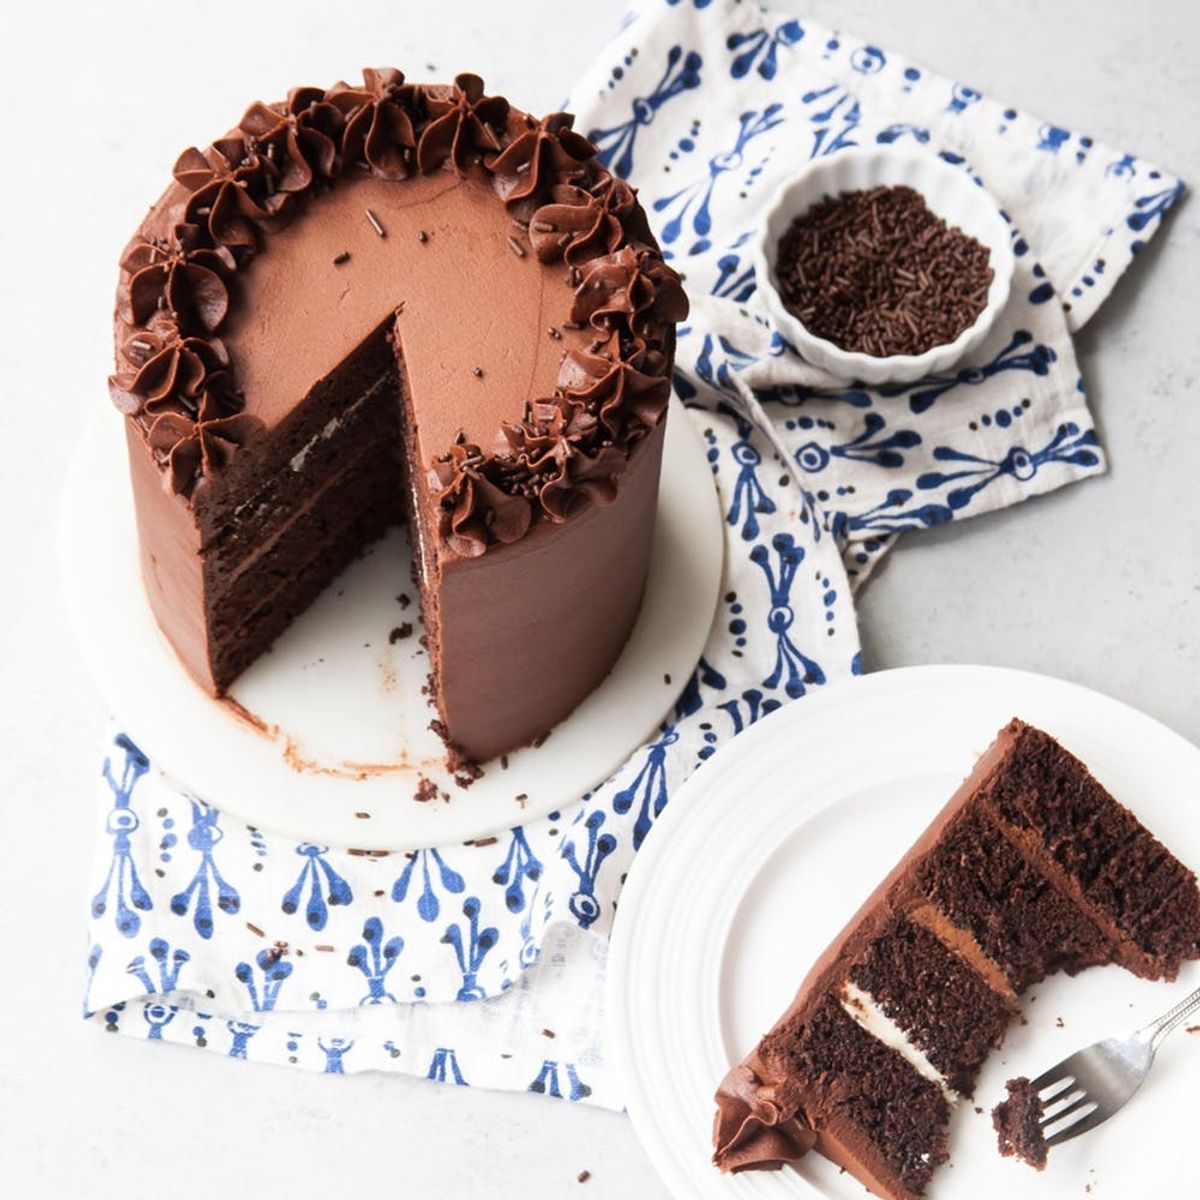 The Ultimate Dessert to Celebrate Chocolate Cake Day!